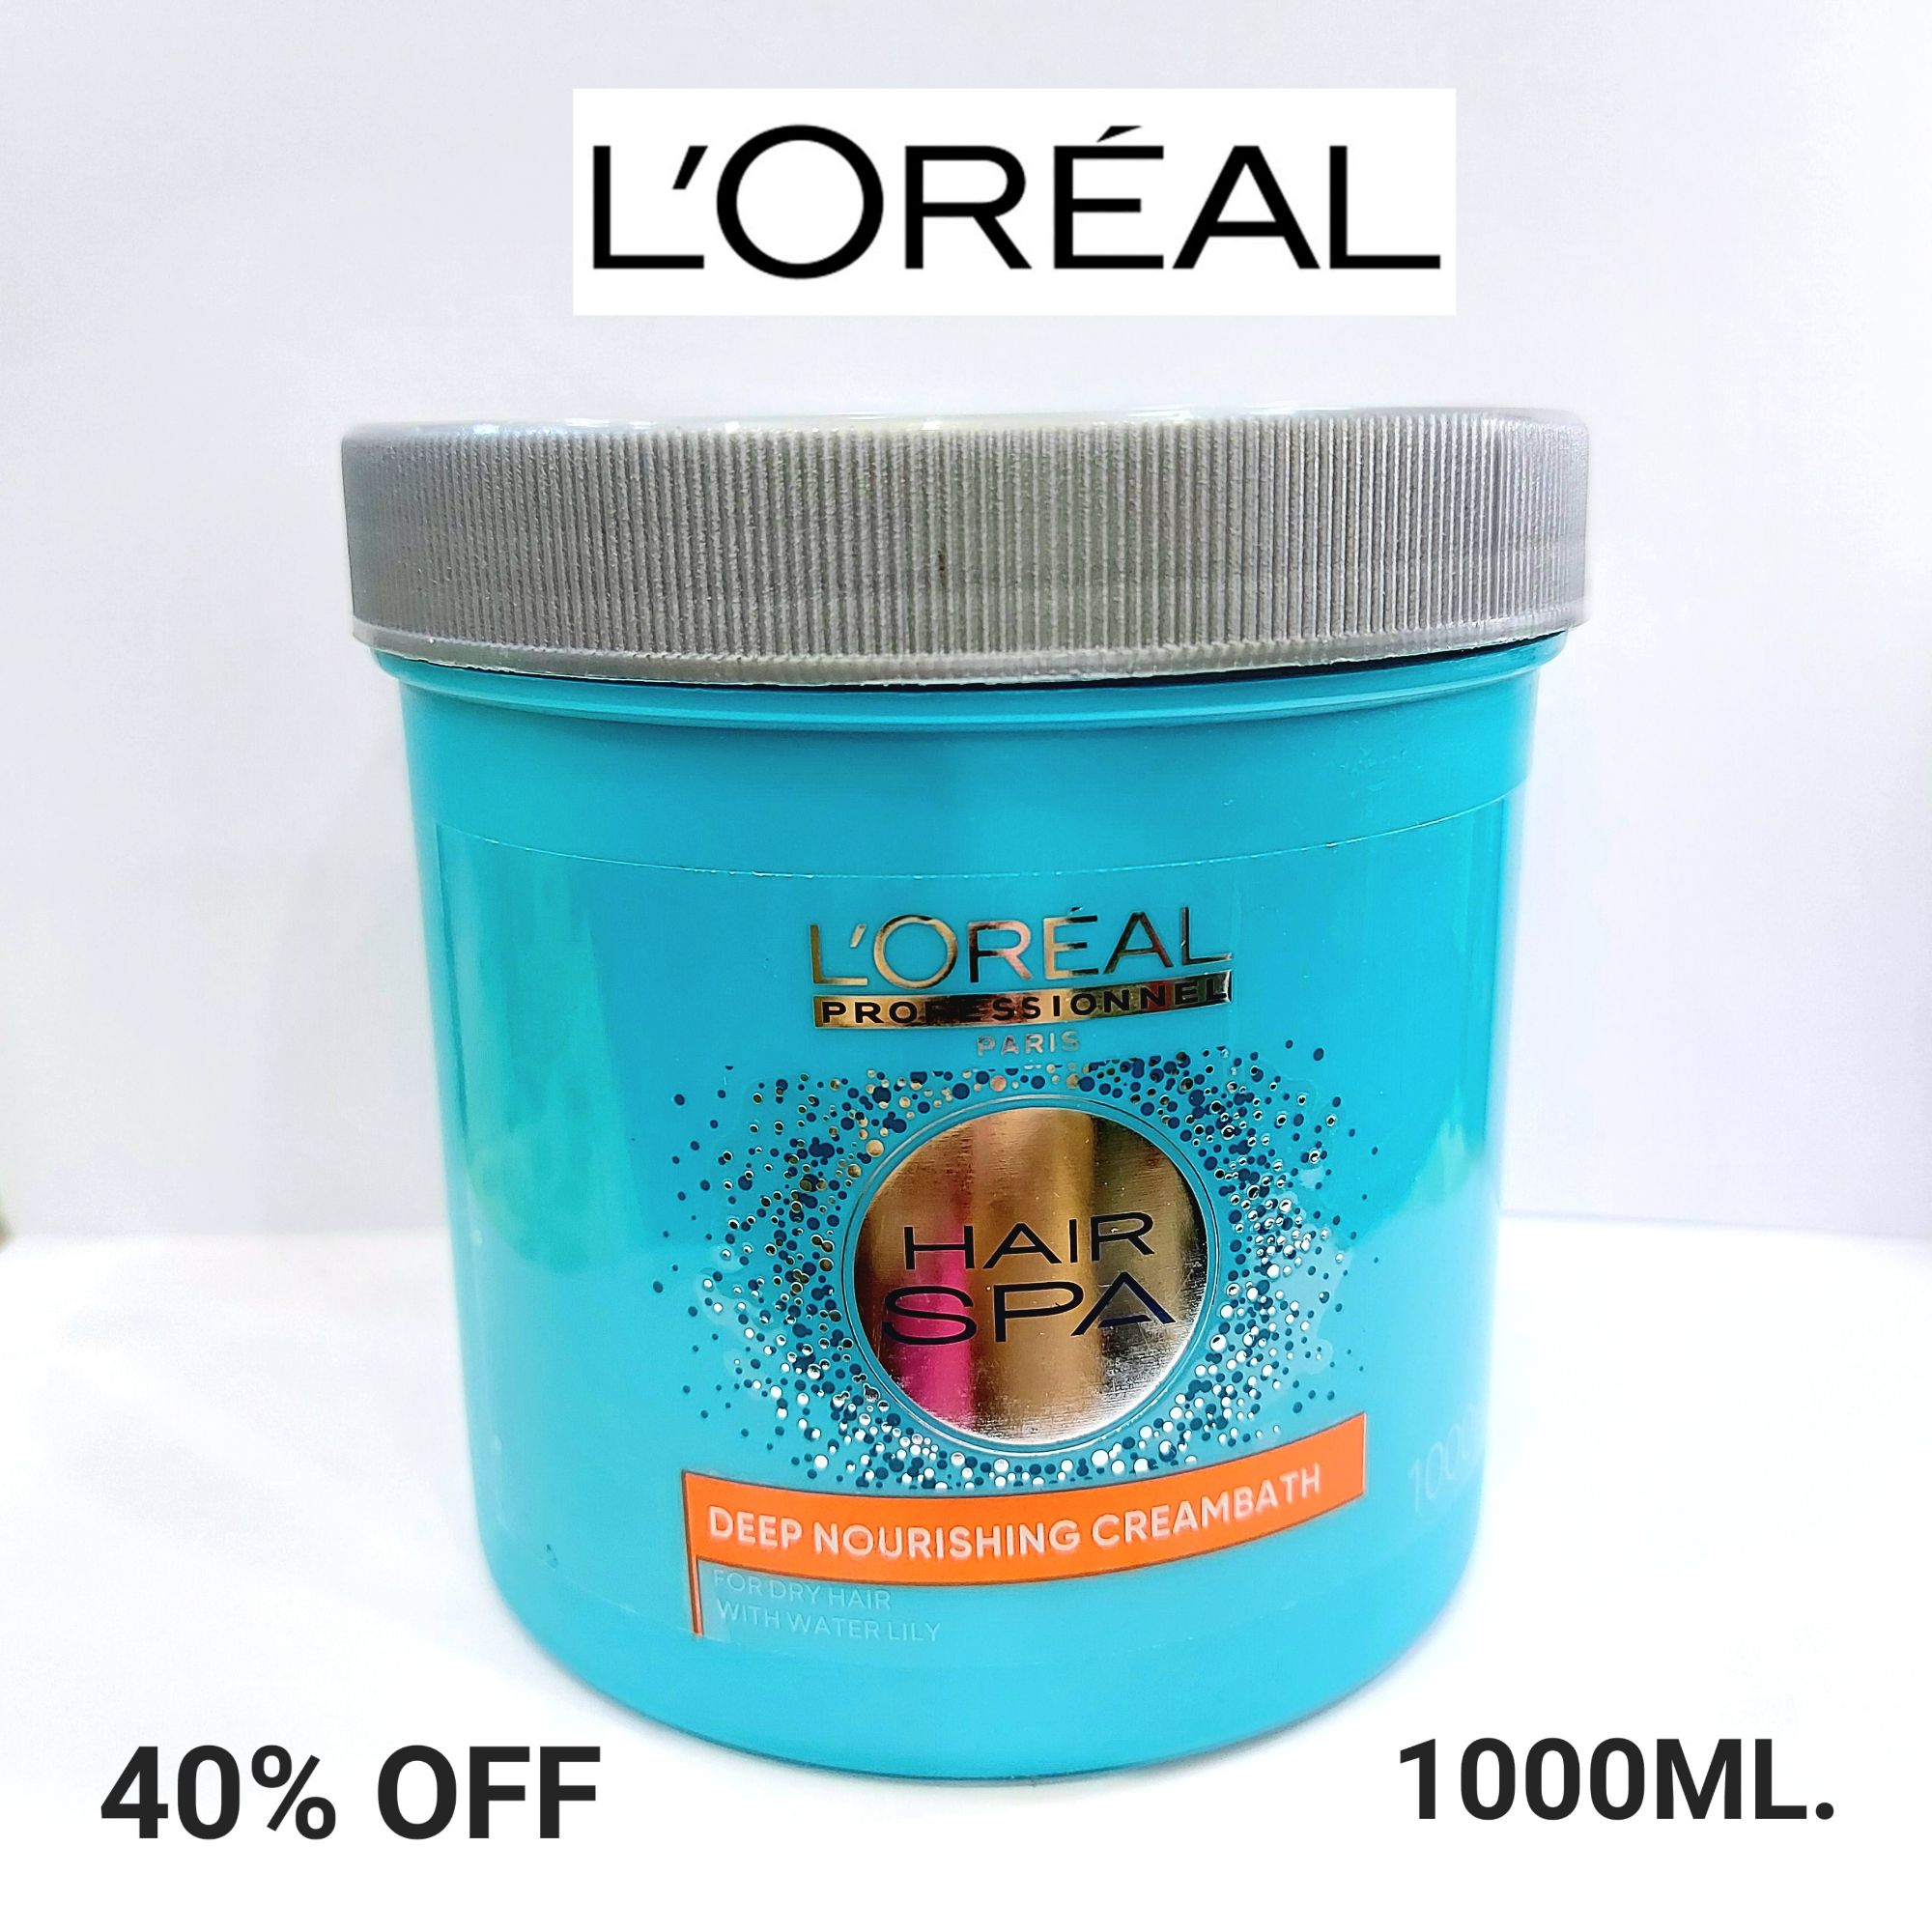 Authentic Loreal Hair Spa Deep Nourishing Creambath 1000ml. (NEW PACKAGING)  | Lazada PH